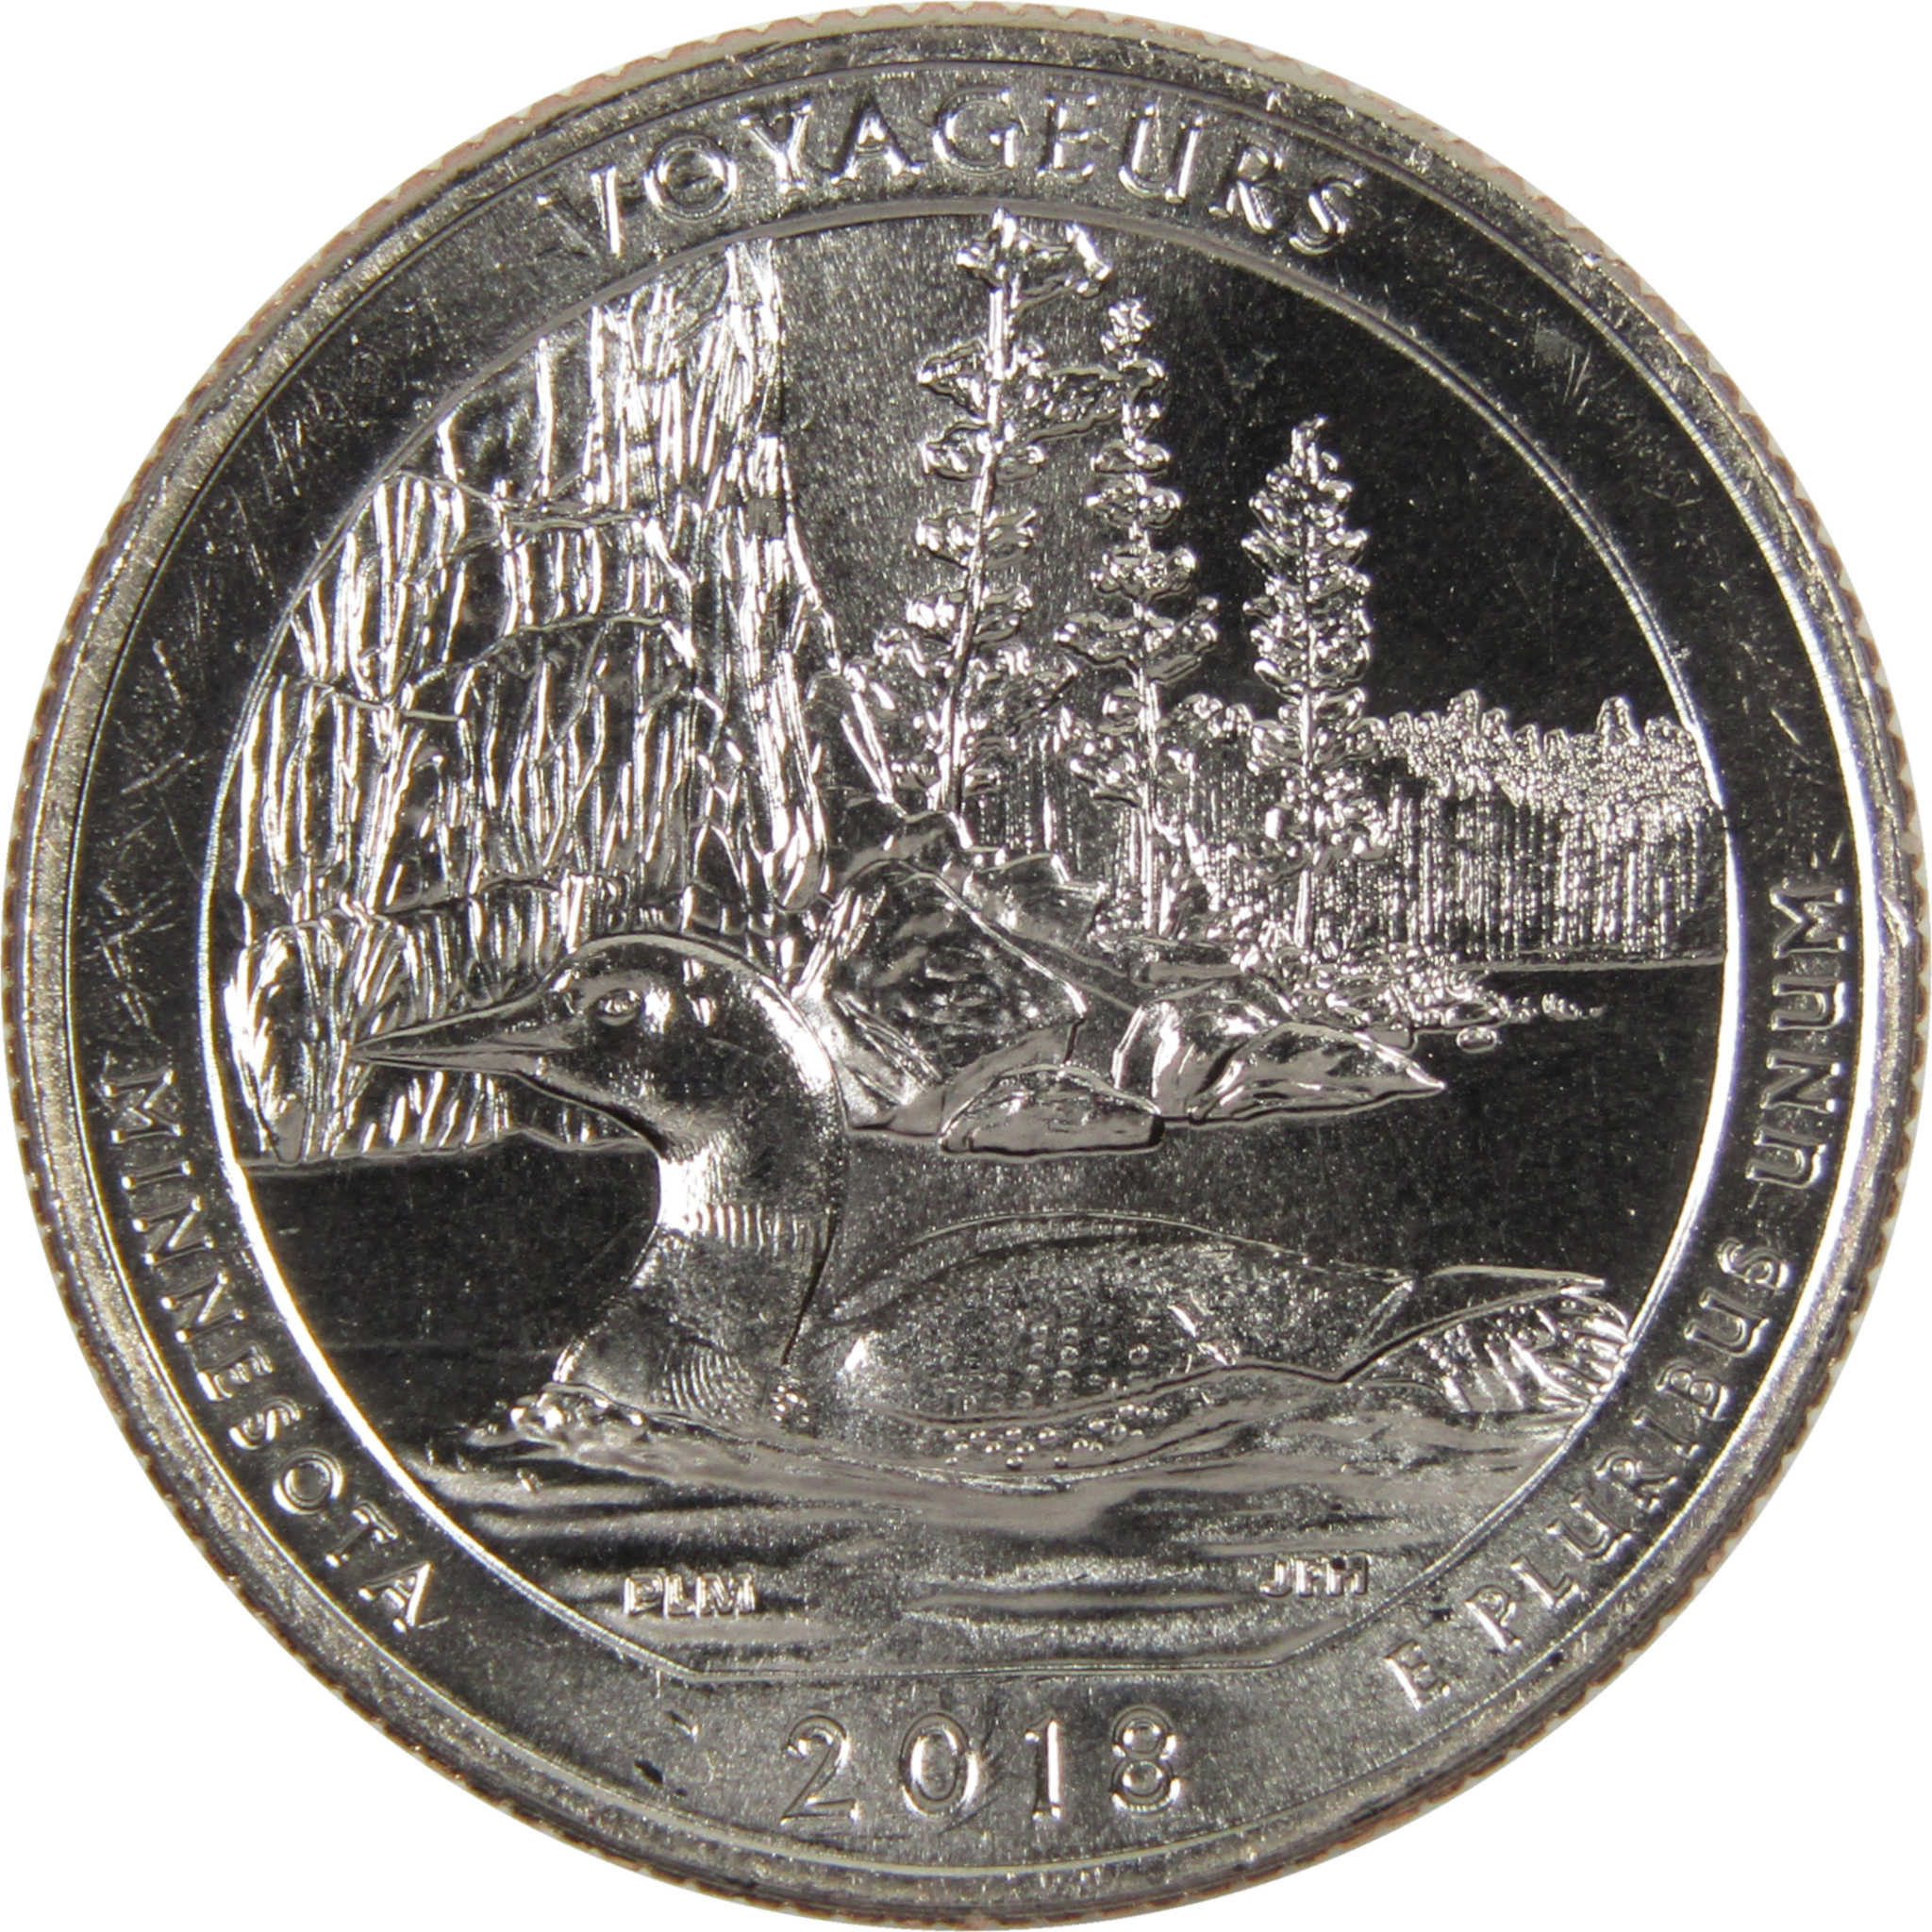 2018 D Voyageurs NP National Park Quarter BU Uncirculated Clad Coin